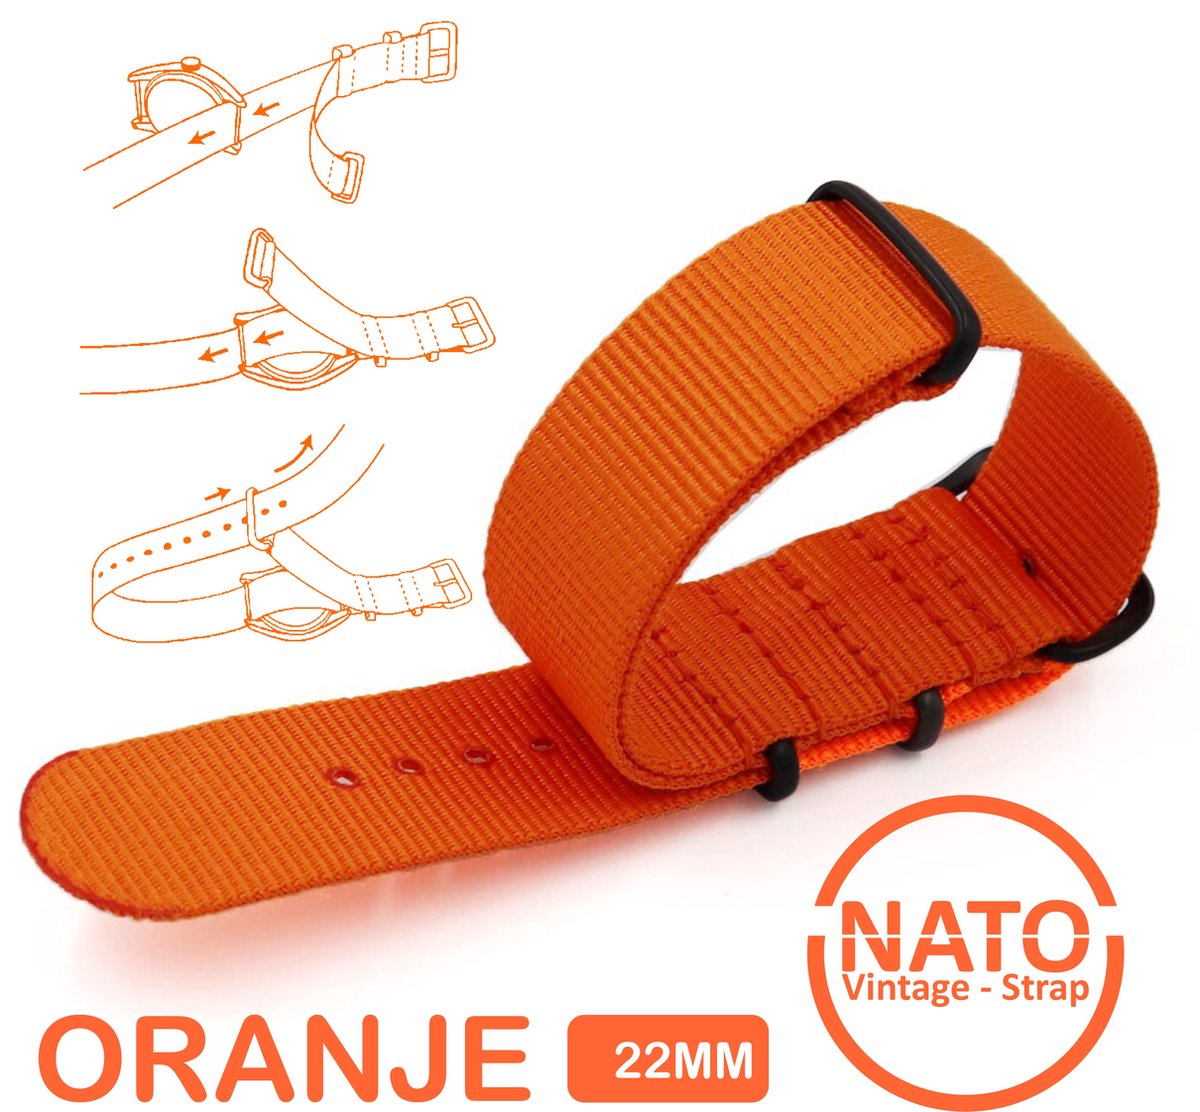 22mm Premium Nato Strap Oranje met zwarte gesp - Vintage James Bond - Nato Strap collectie - Mannen - Vrouwen - Horlogeband - 22 mm bandbreedte voor oa. Seiko Rolex Omega Casio en Citizen